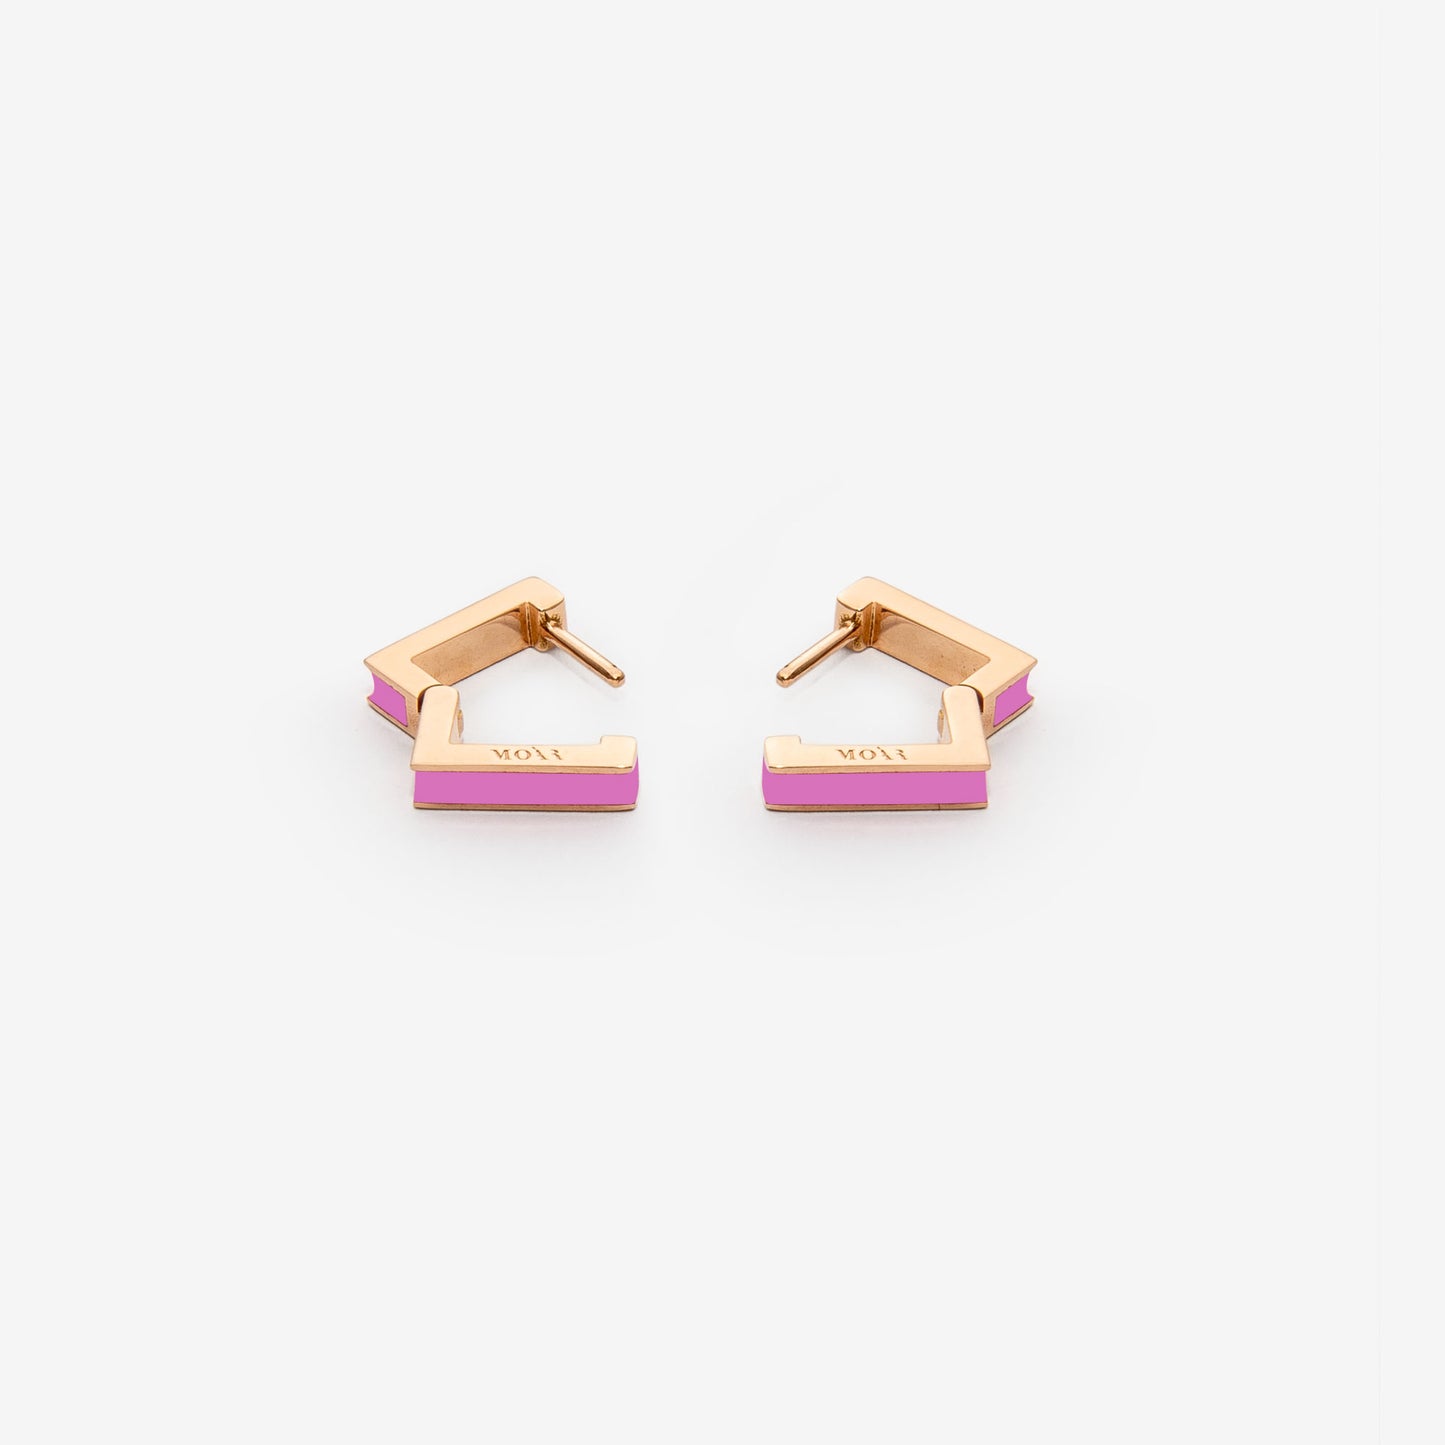 Square light pink earrings